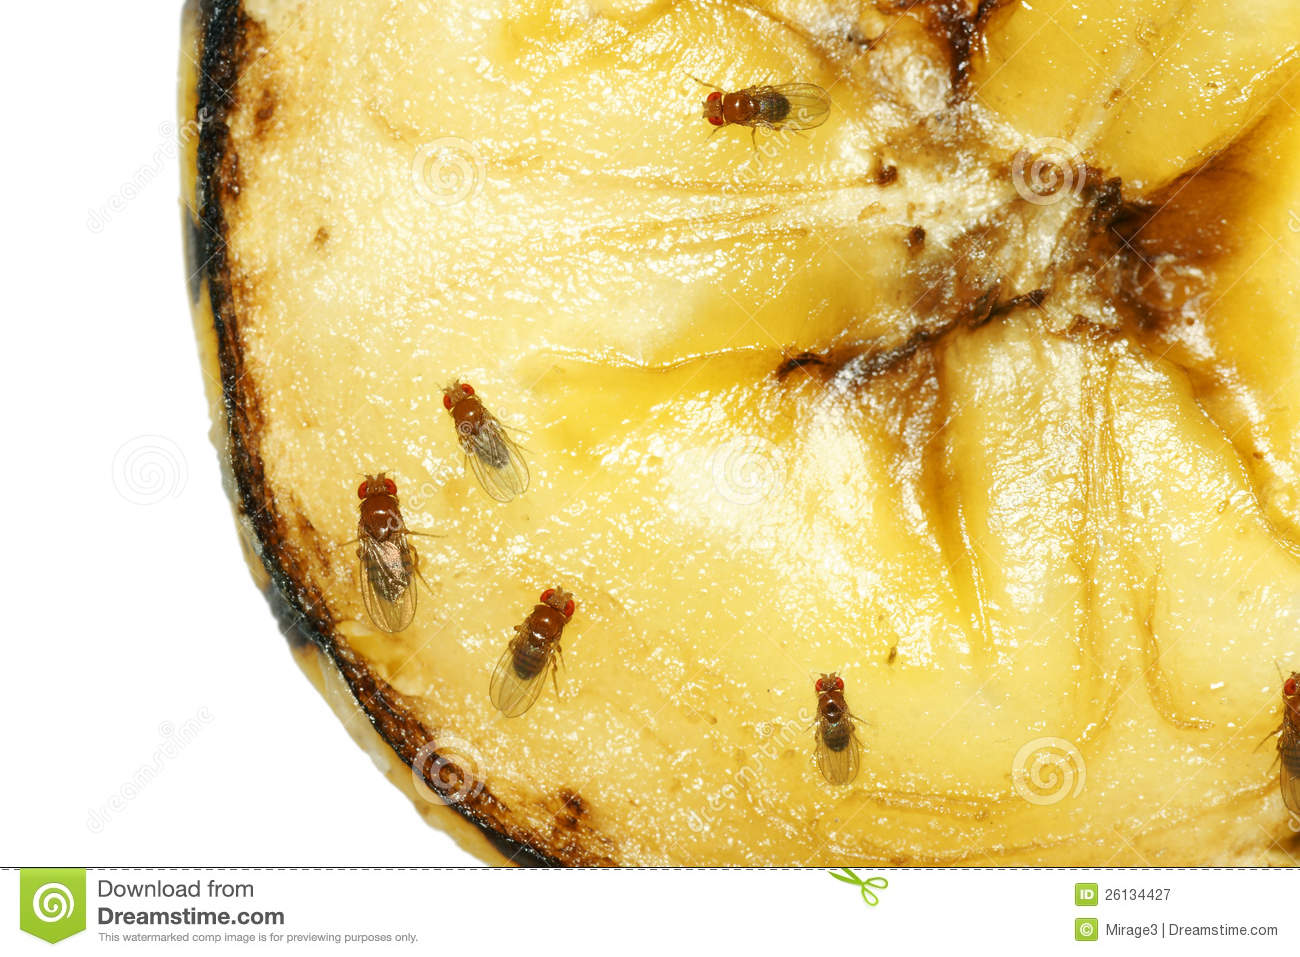 Fruit Flies On Rotting Banana Royalty Free Stock Photography   Image    